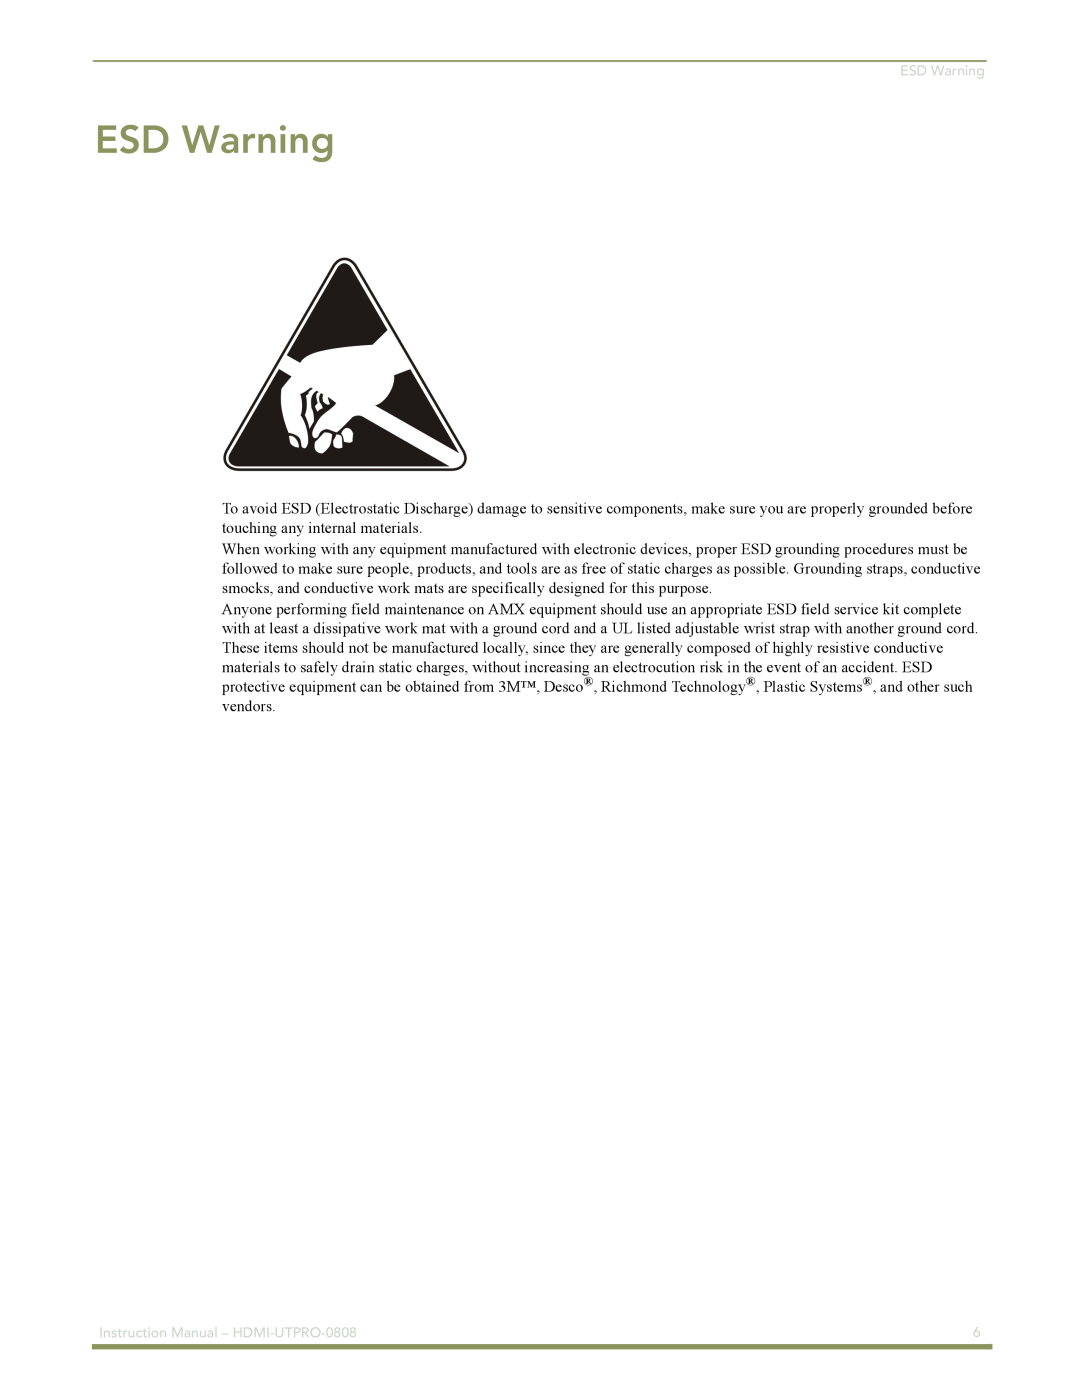 AMX instruction manual ESD Warning, Instruction Manual – HDMI-UTPRO-0808 